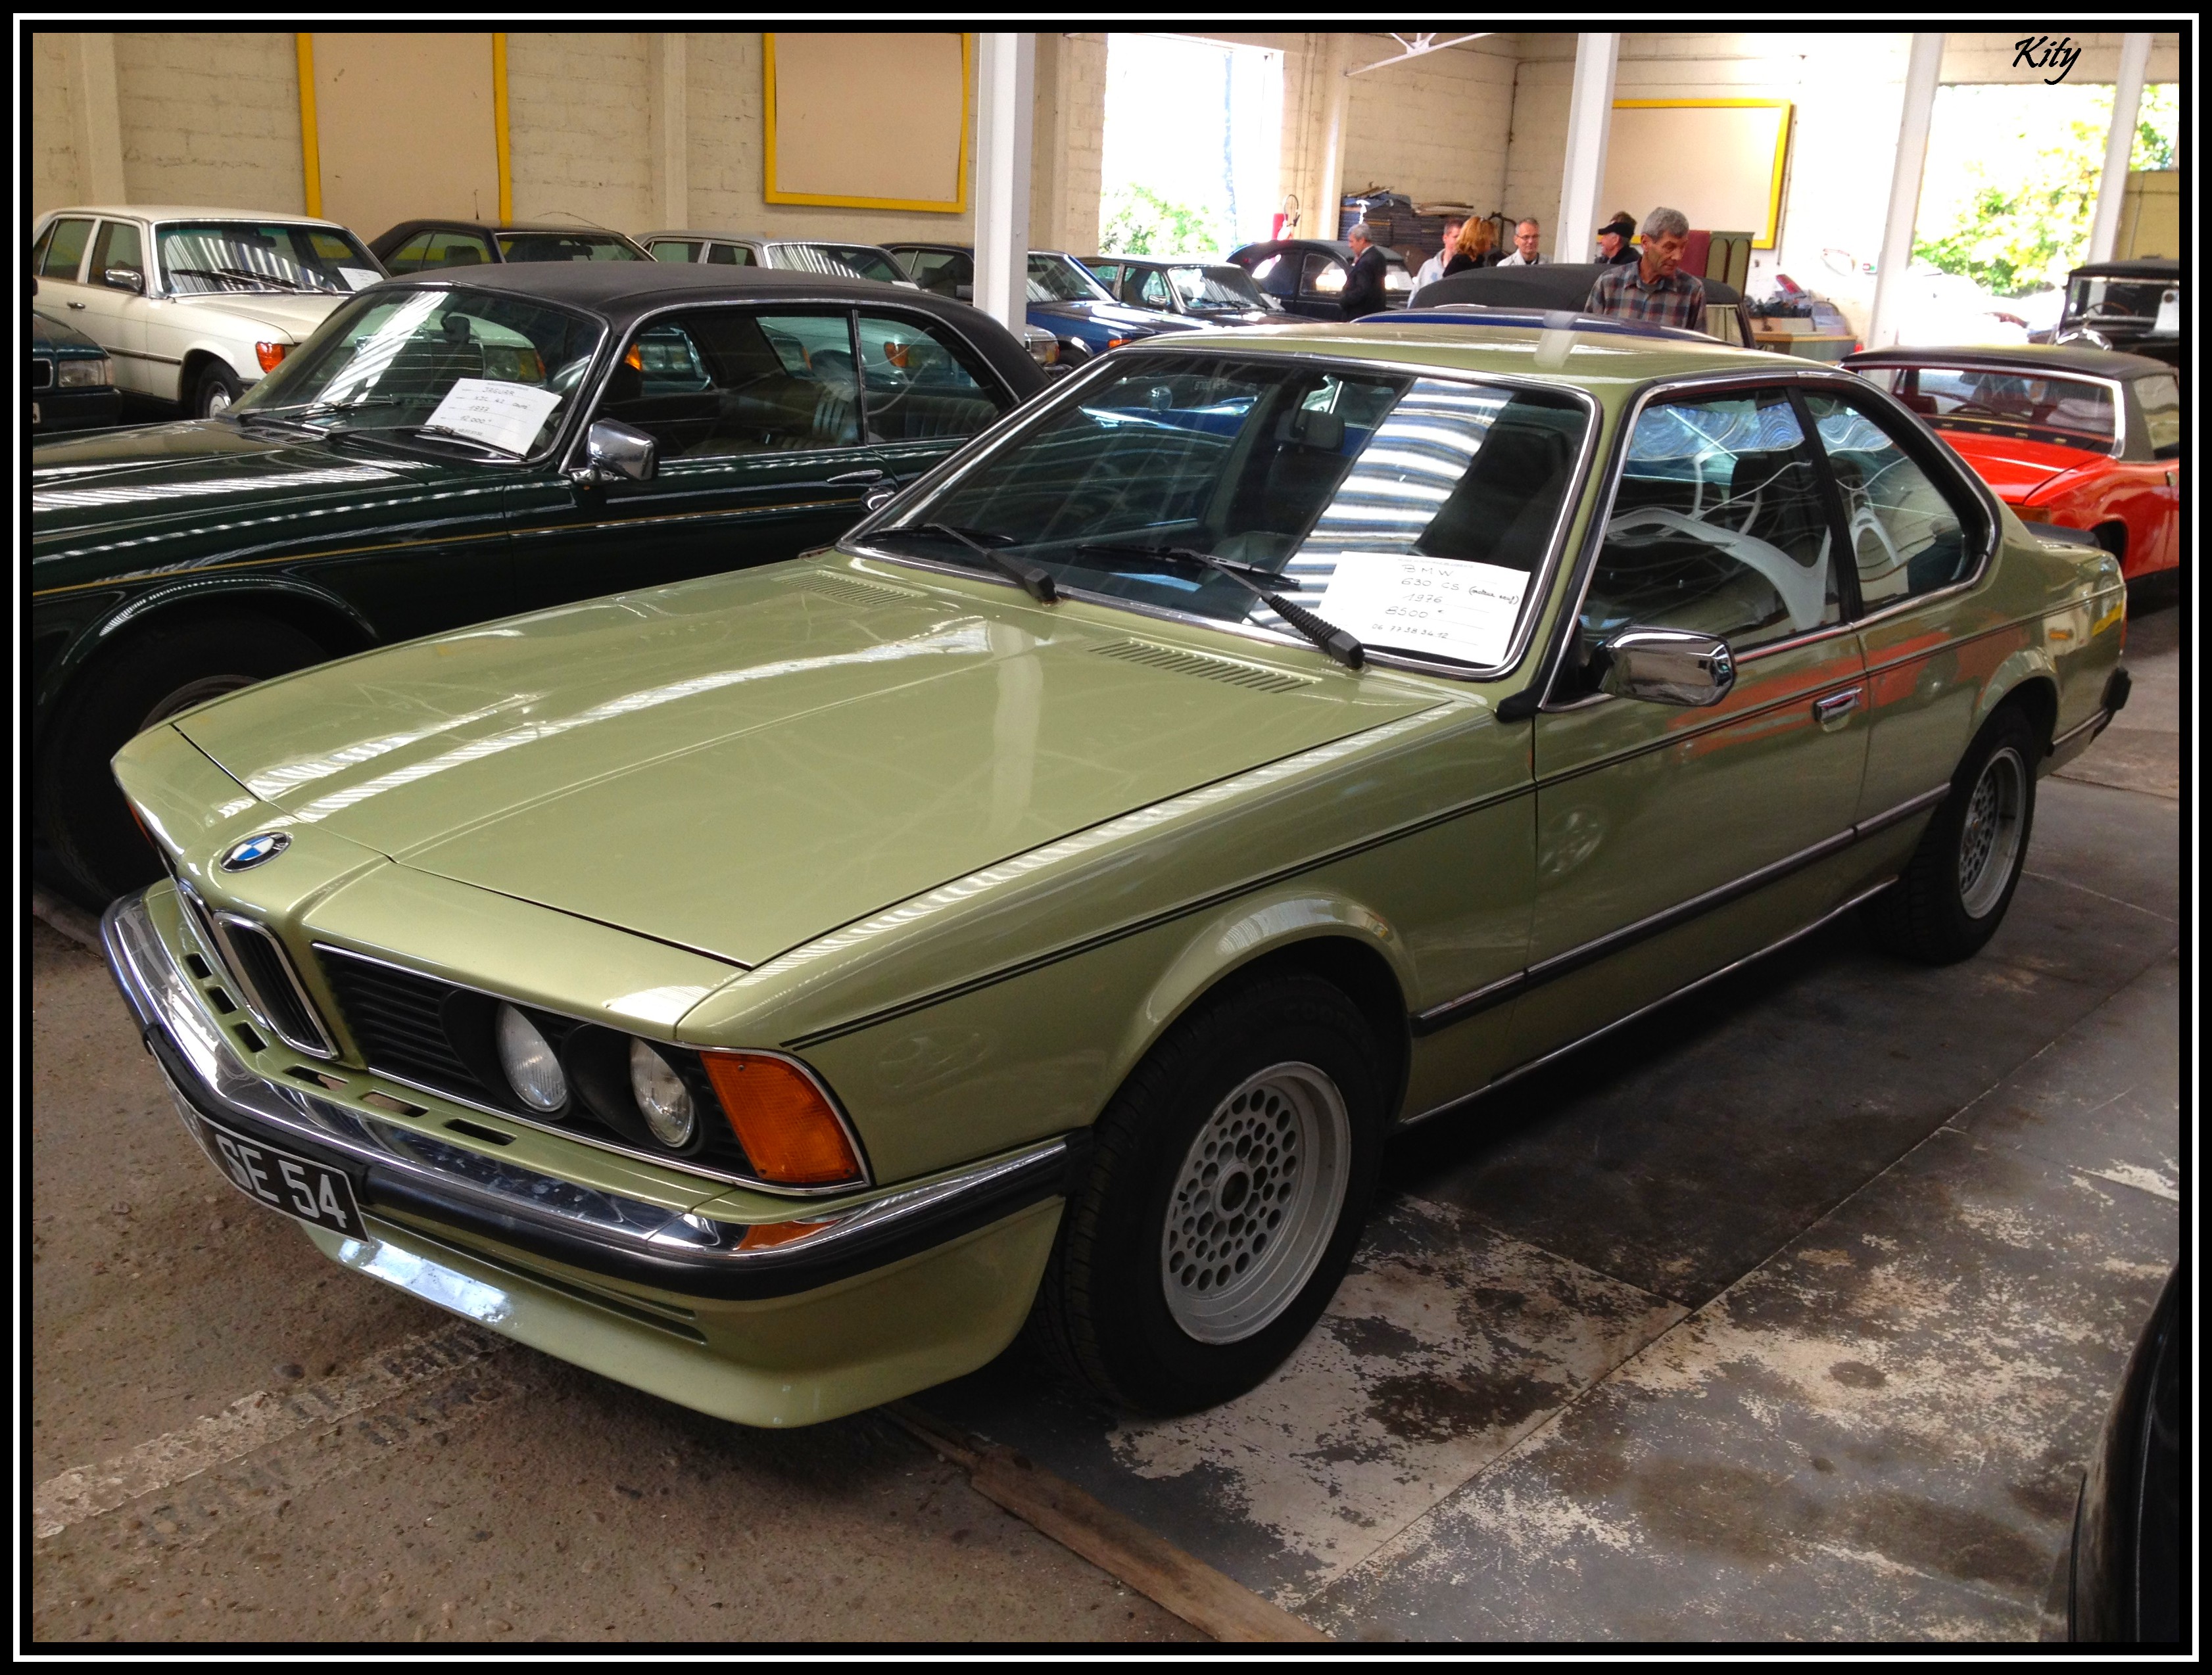 BMW 630 CS - 1976 | Flickr - Photo Sharing!